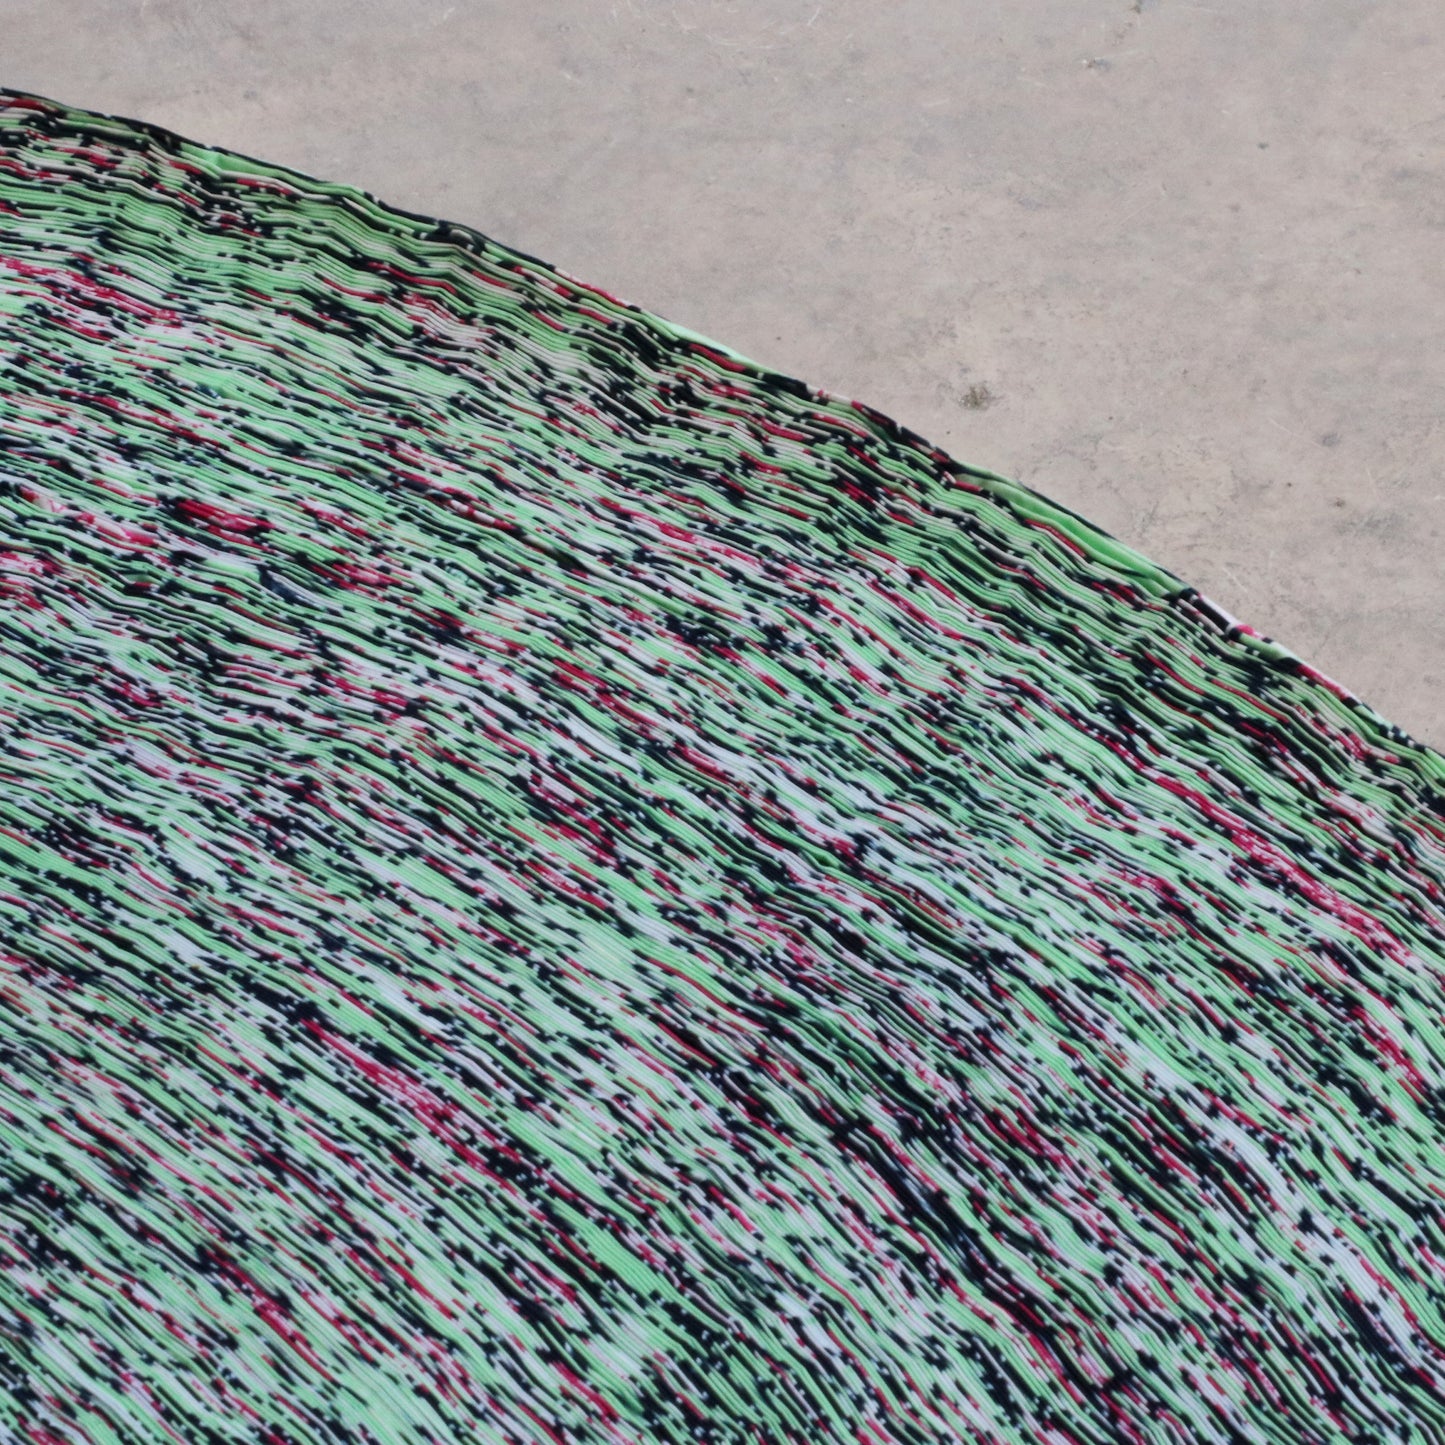 Netherlands, Simone Post, Vlisco Recycled Carpet Pastel Green